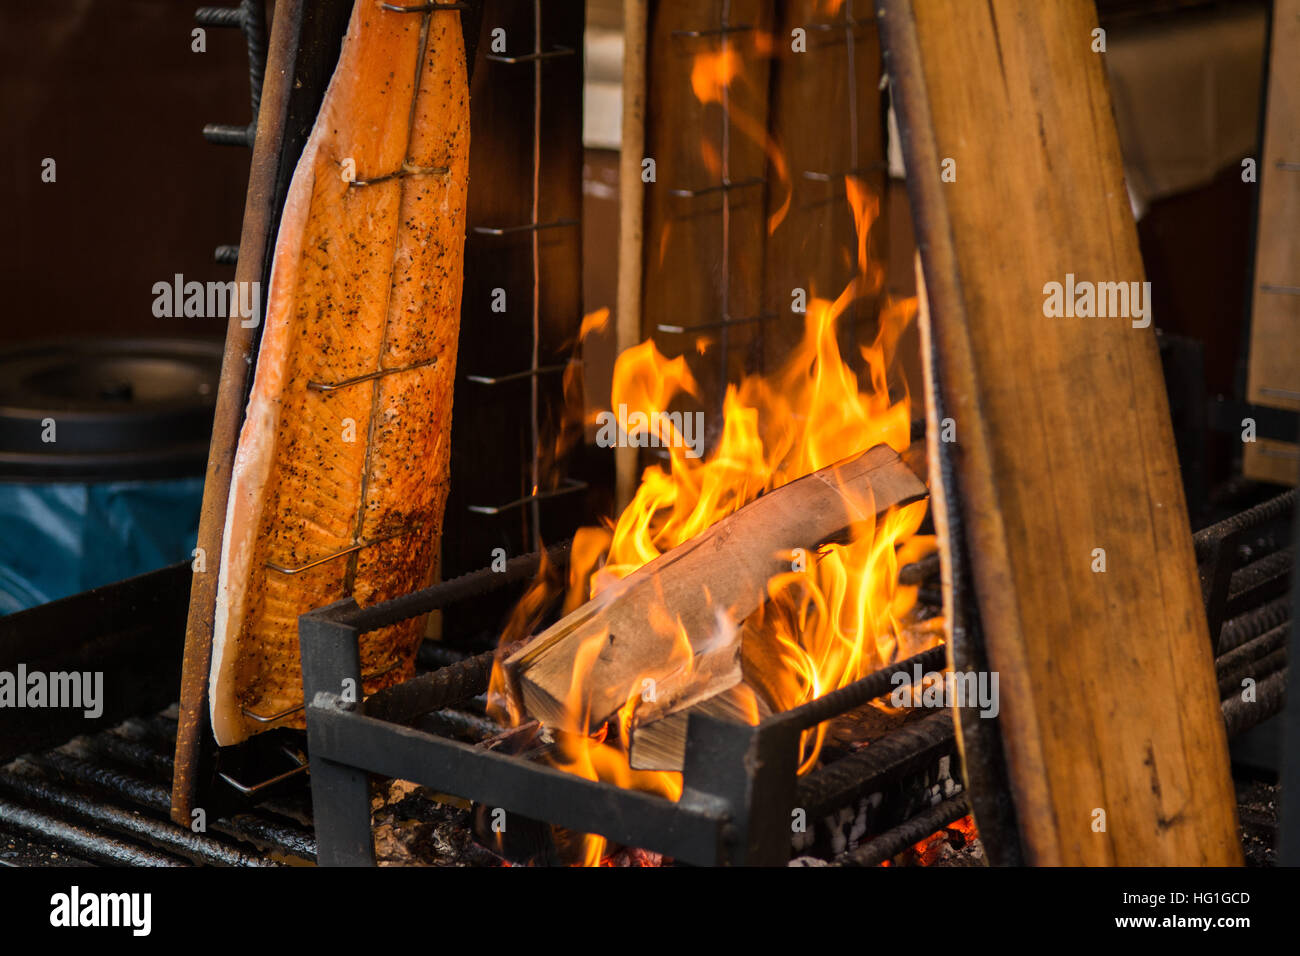 hot smoked salmon smoking by open fire Stock Photo